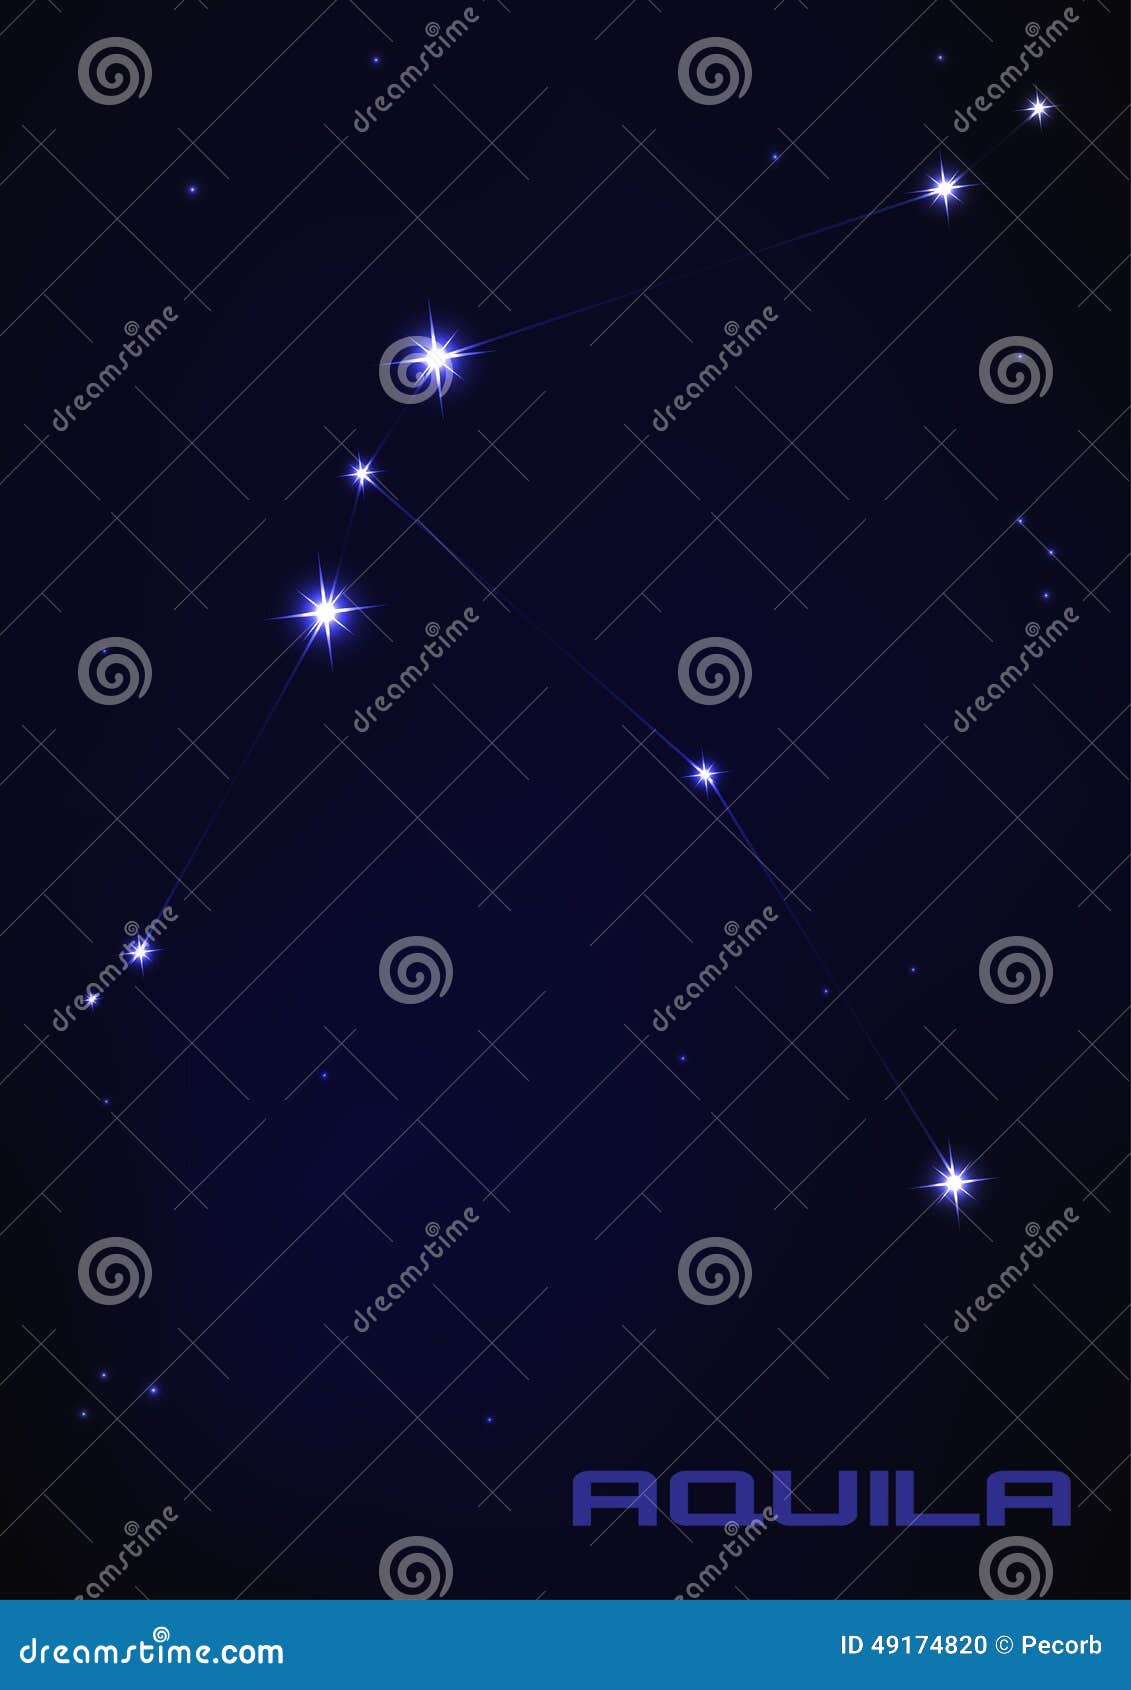 aquila star constellation